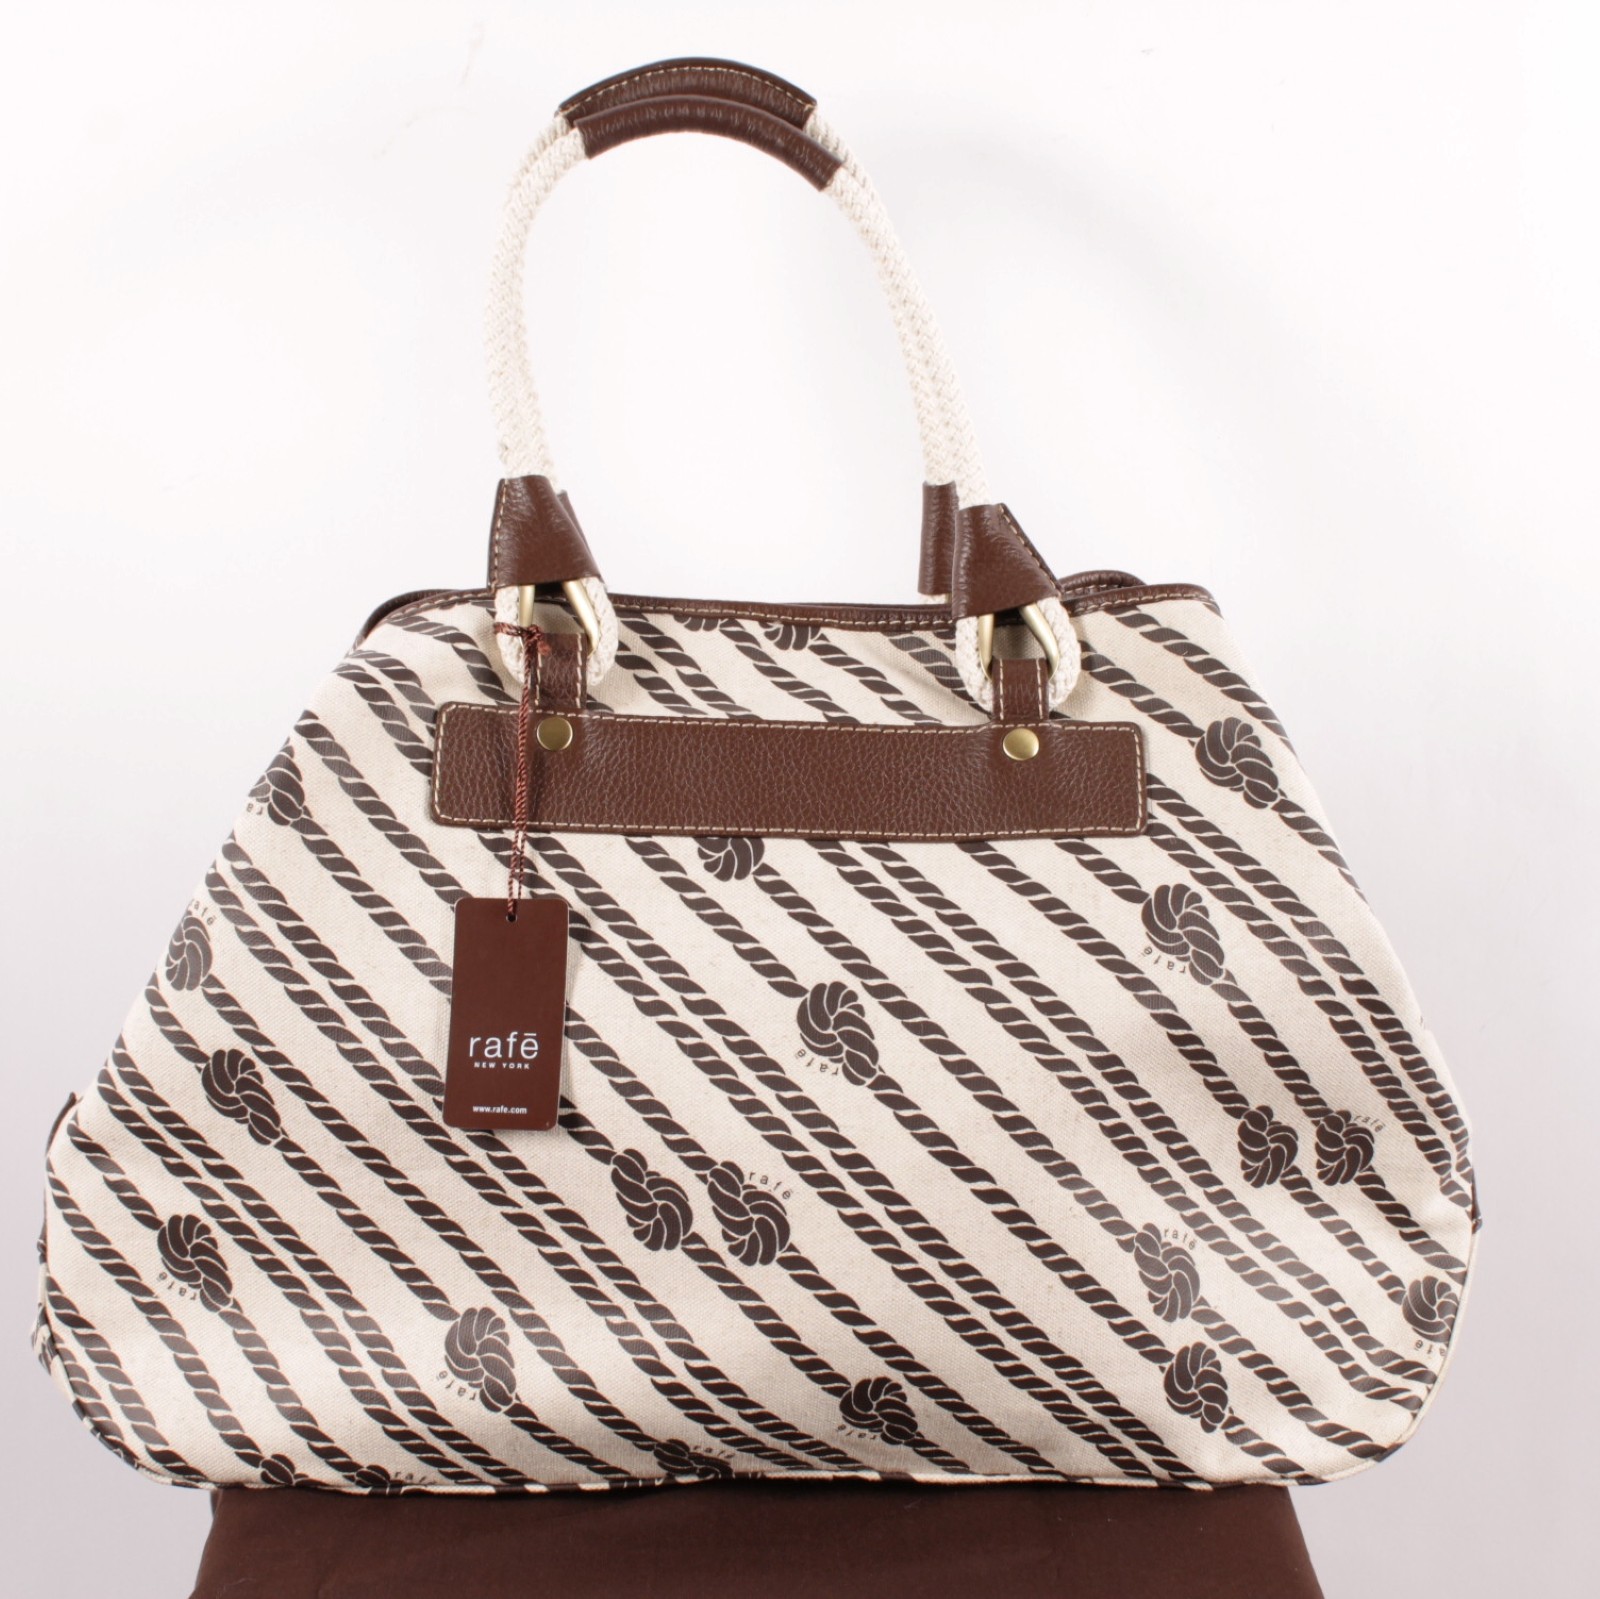 Rafe New York Brown Handbag Large Tote | eBay